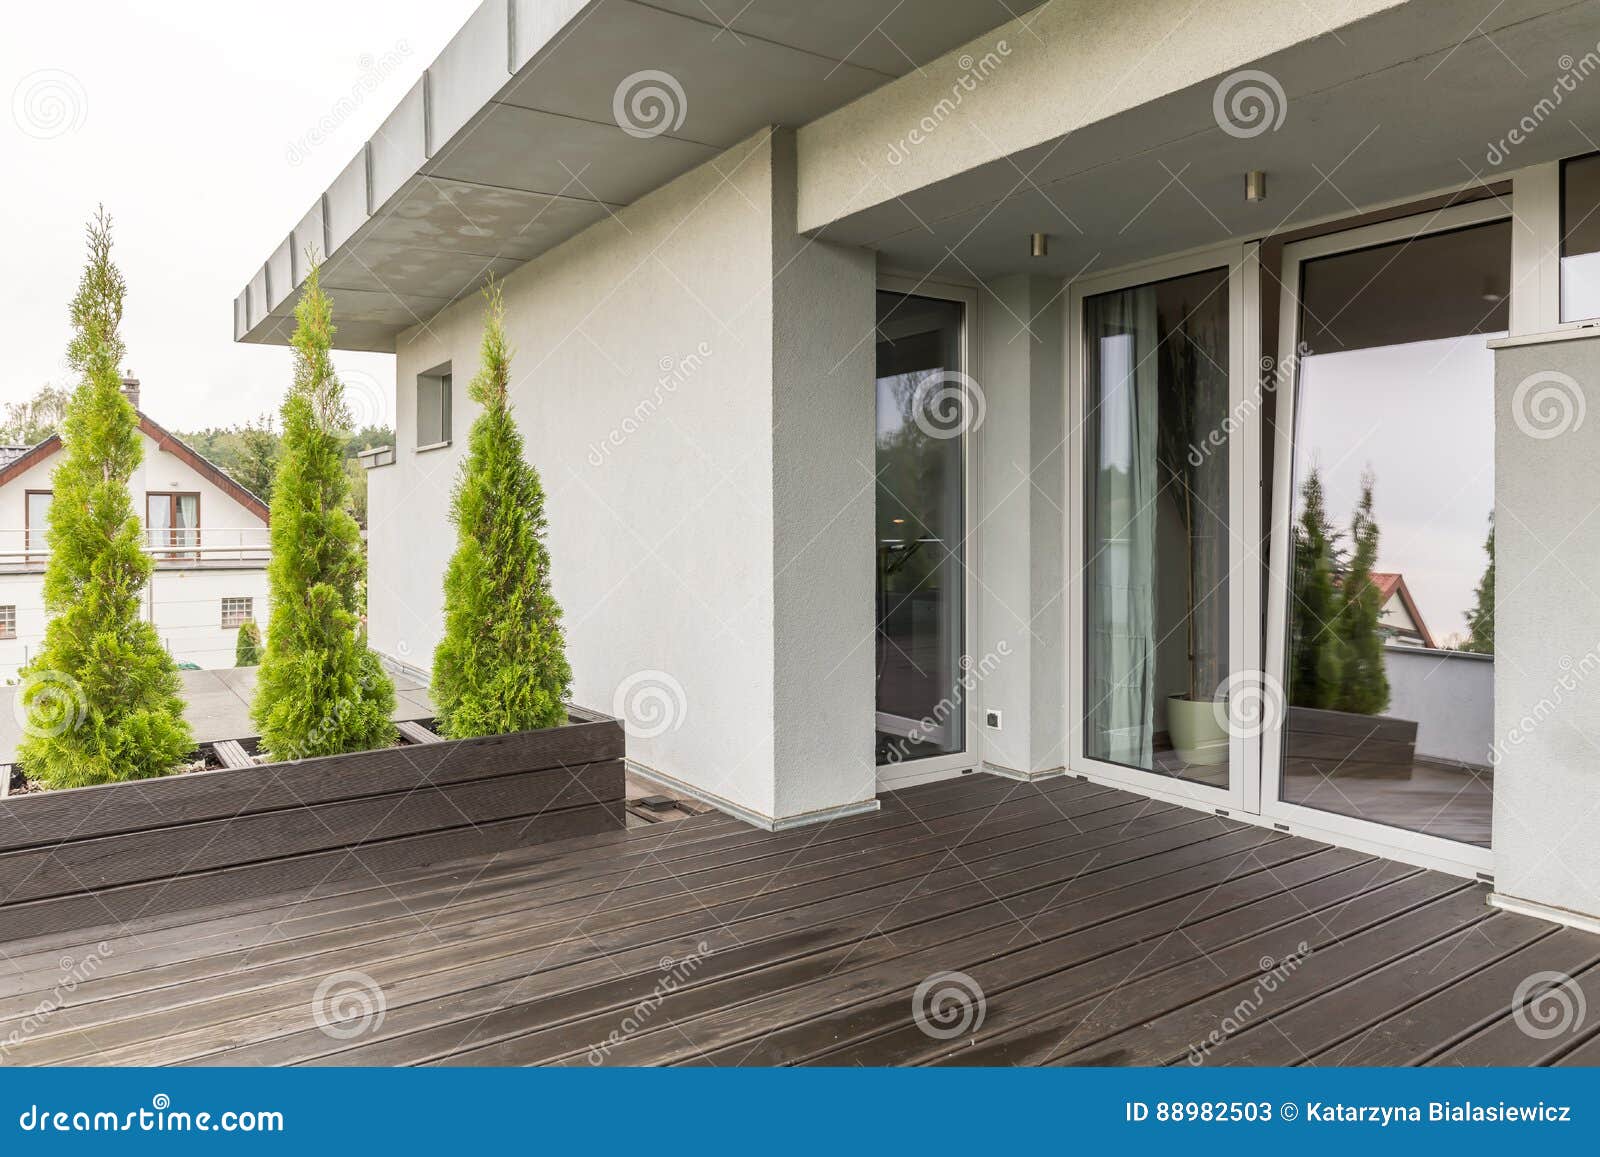 luxurious villa terrace idea new design wooden flooring 88982503